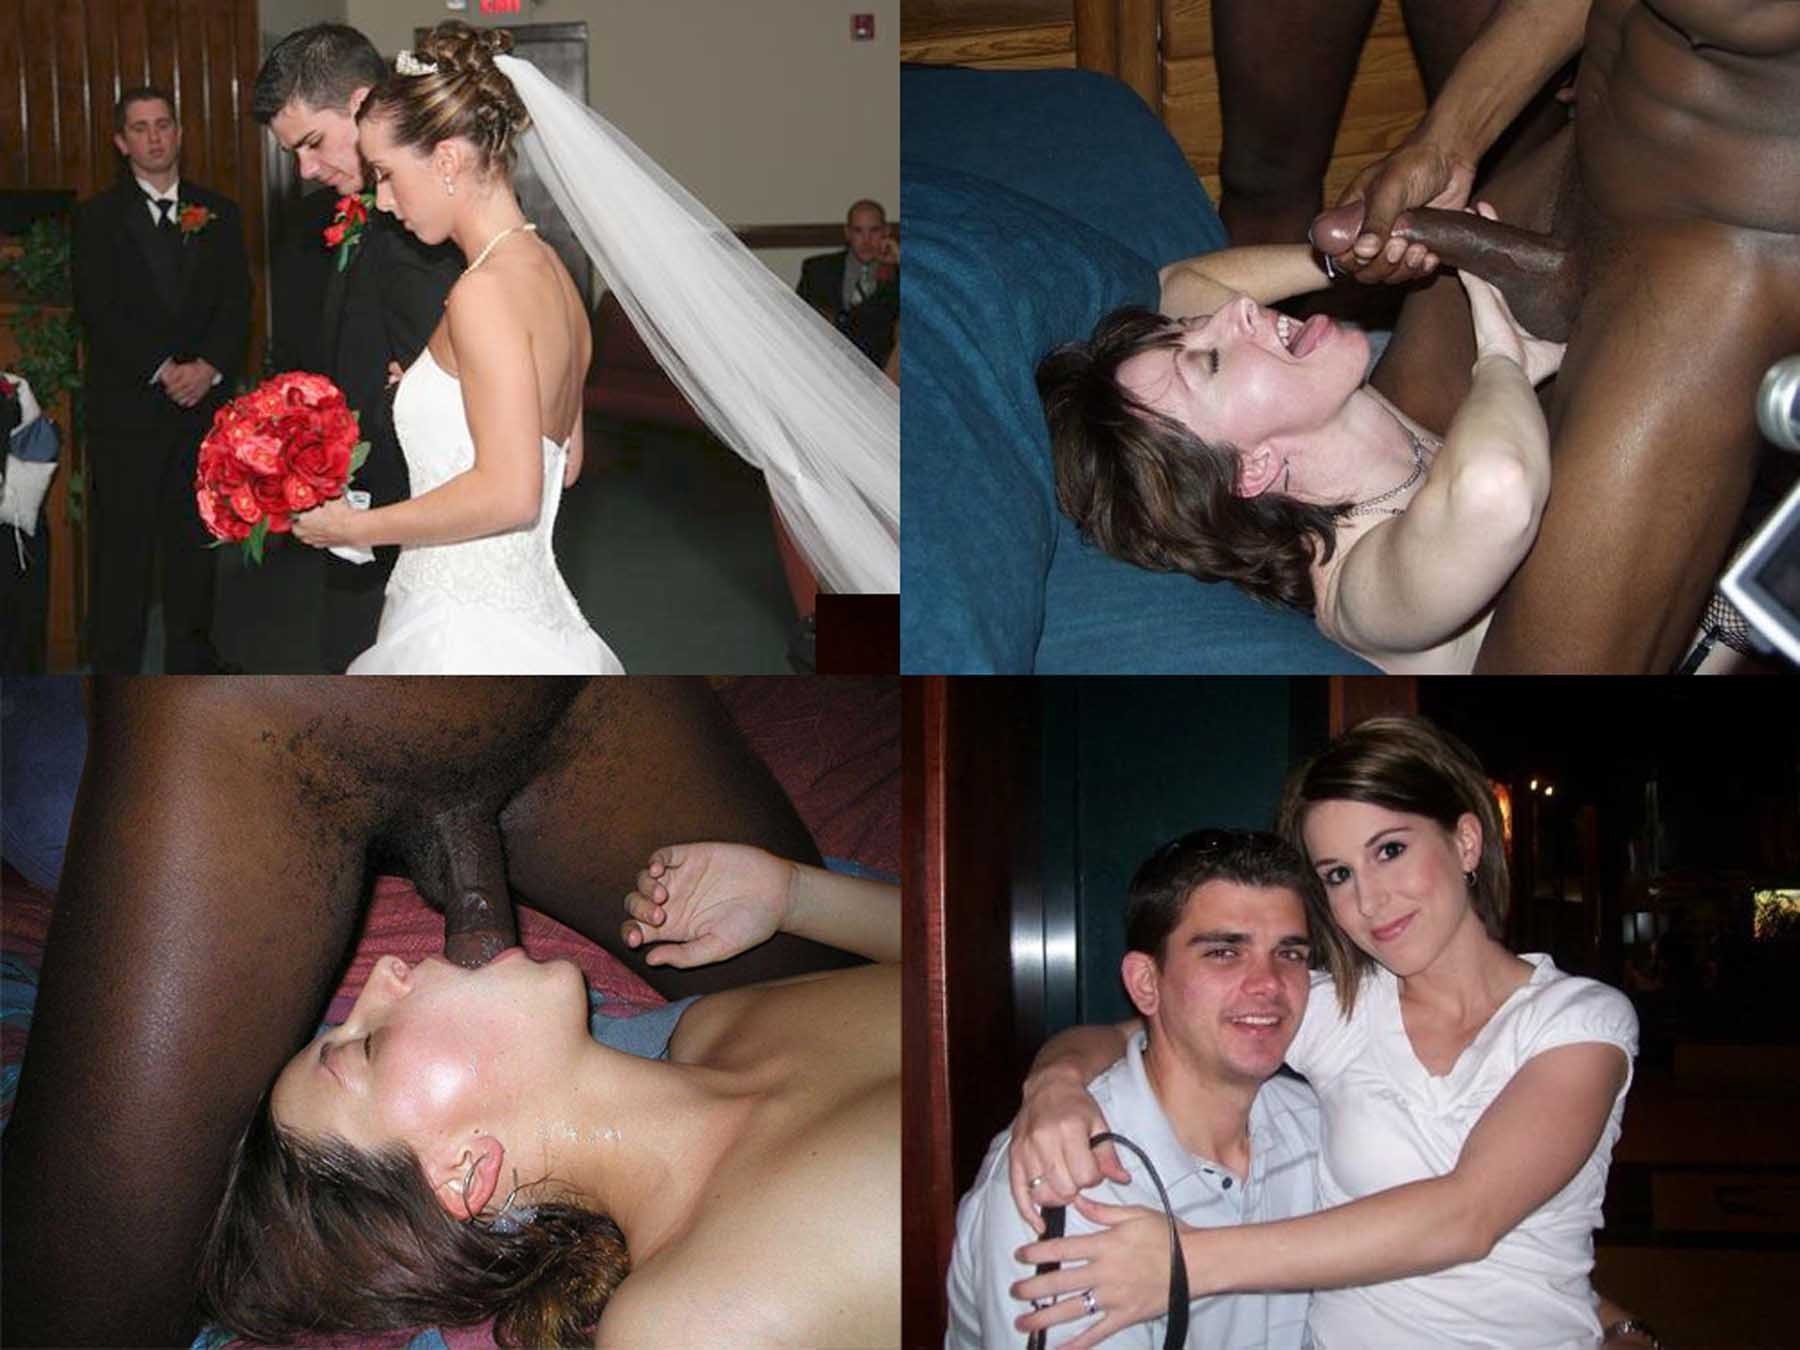 Sex Wife Porn - My wife is a sexwife (55 photos) - motherless porn pics